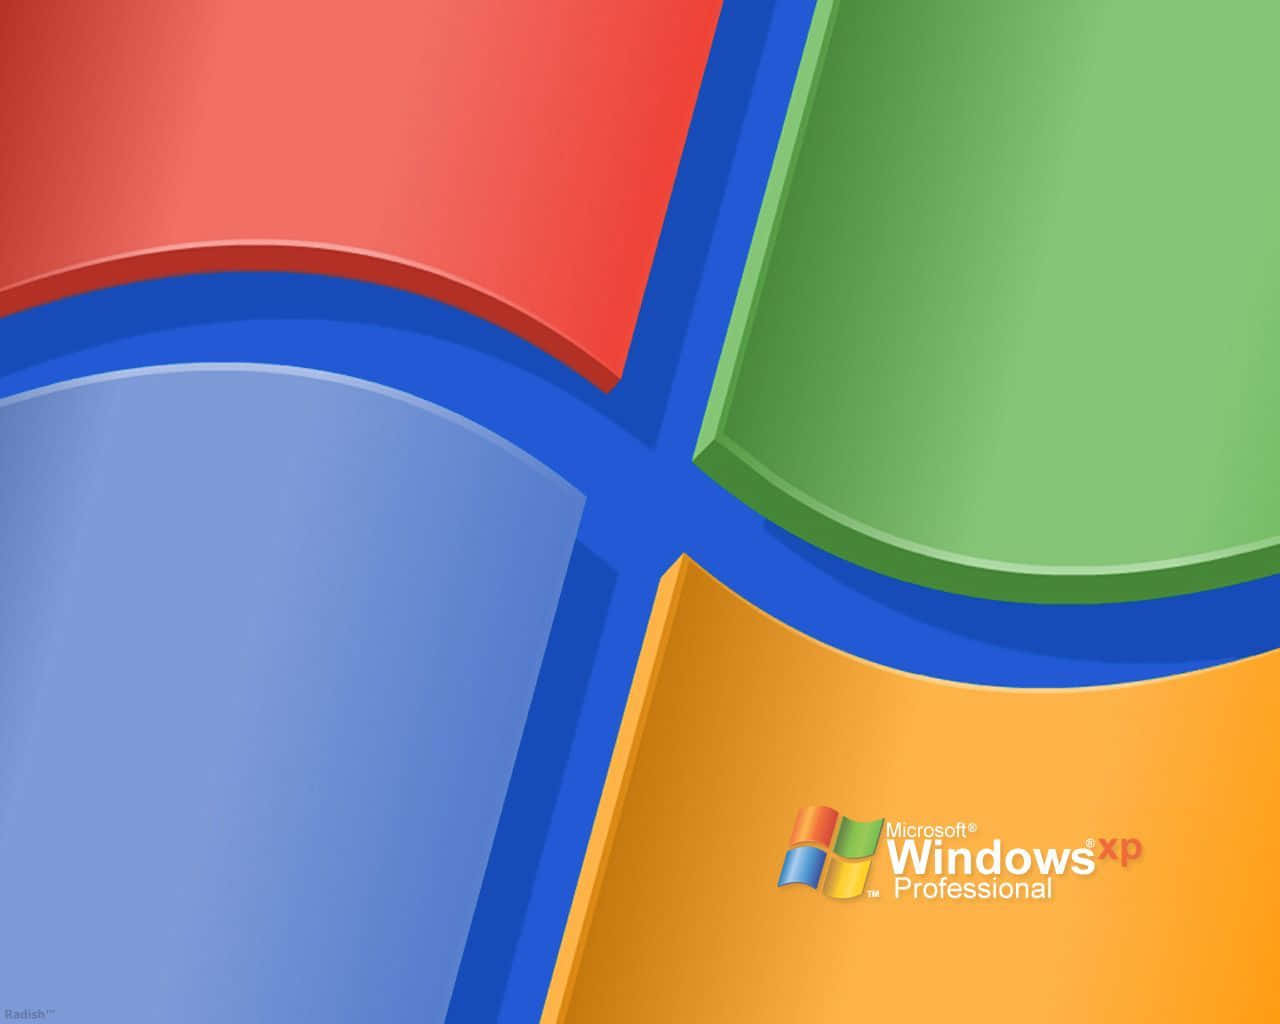 Oplevdet Nostalgiske Design Fra Windows Xp.